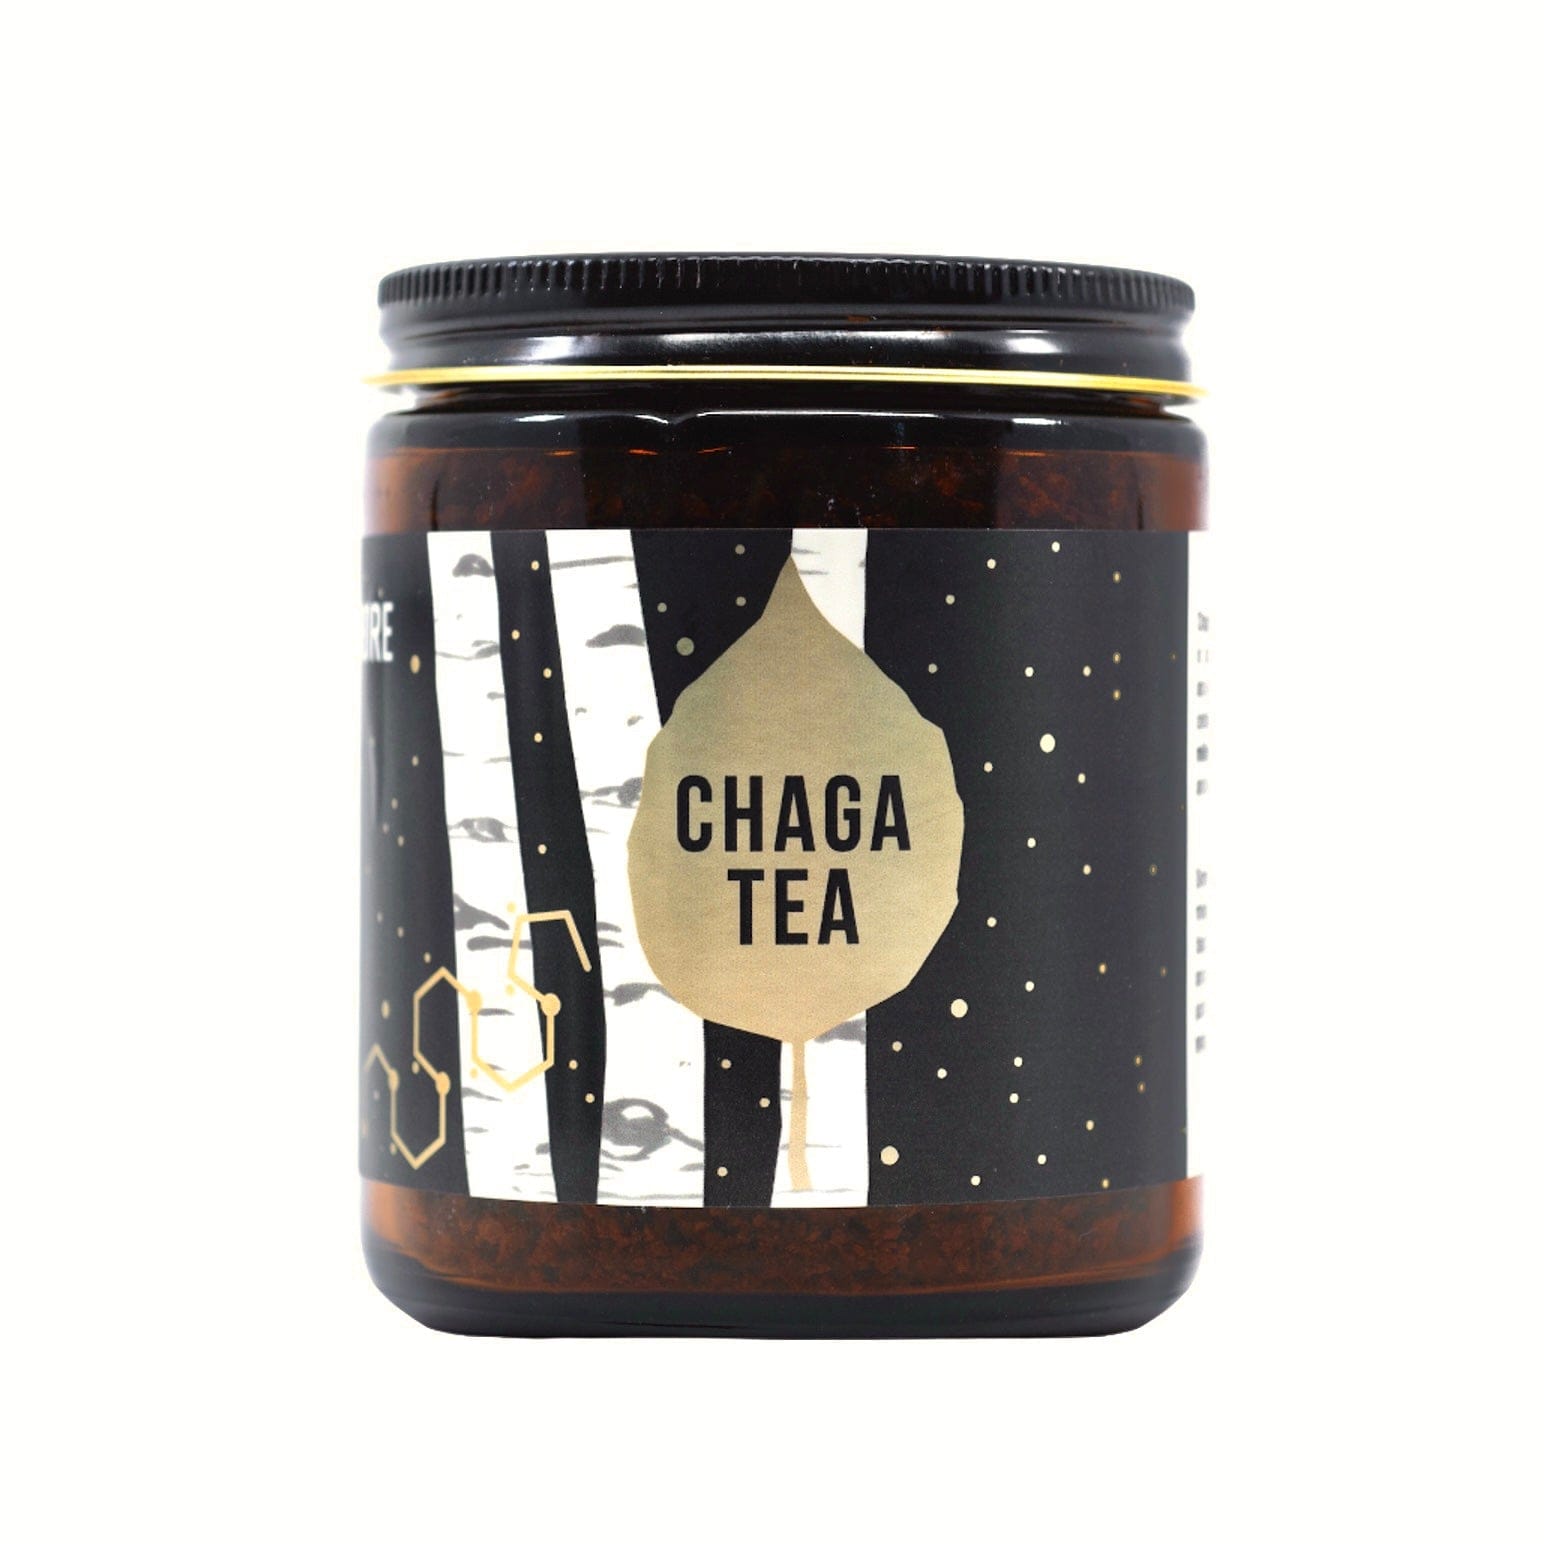 Wild Foraged Chaga Mushroom Tea Wellness Supplements North Spore 2.4 oz jar 